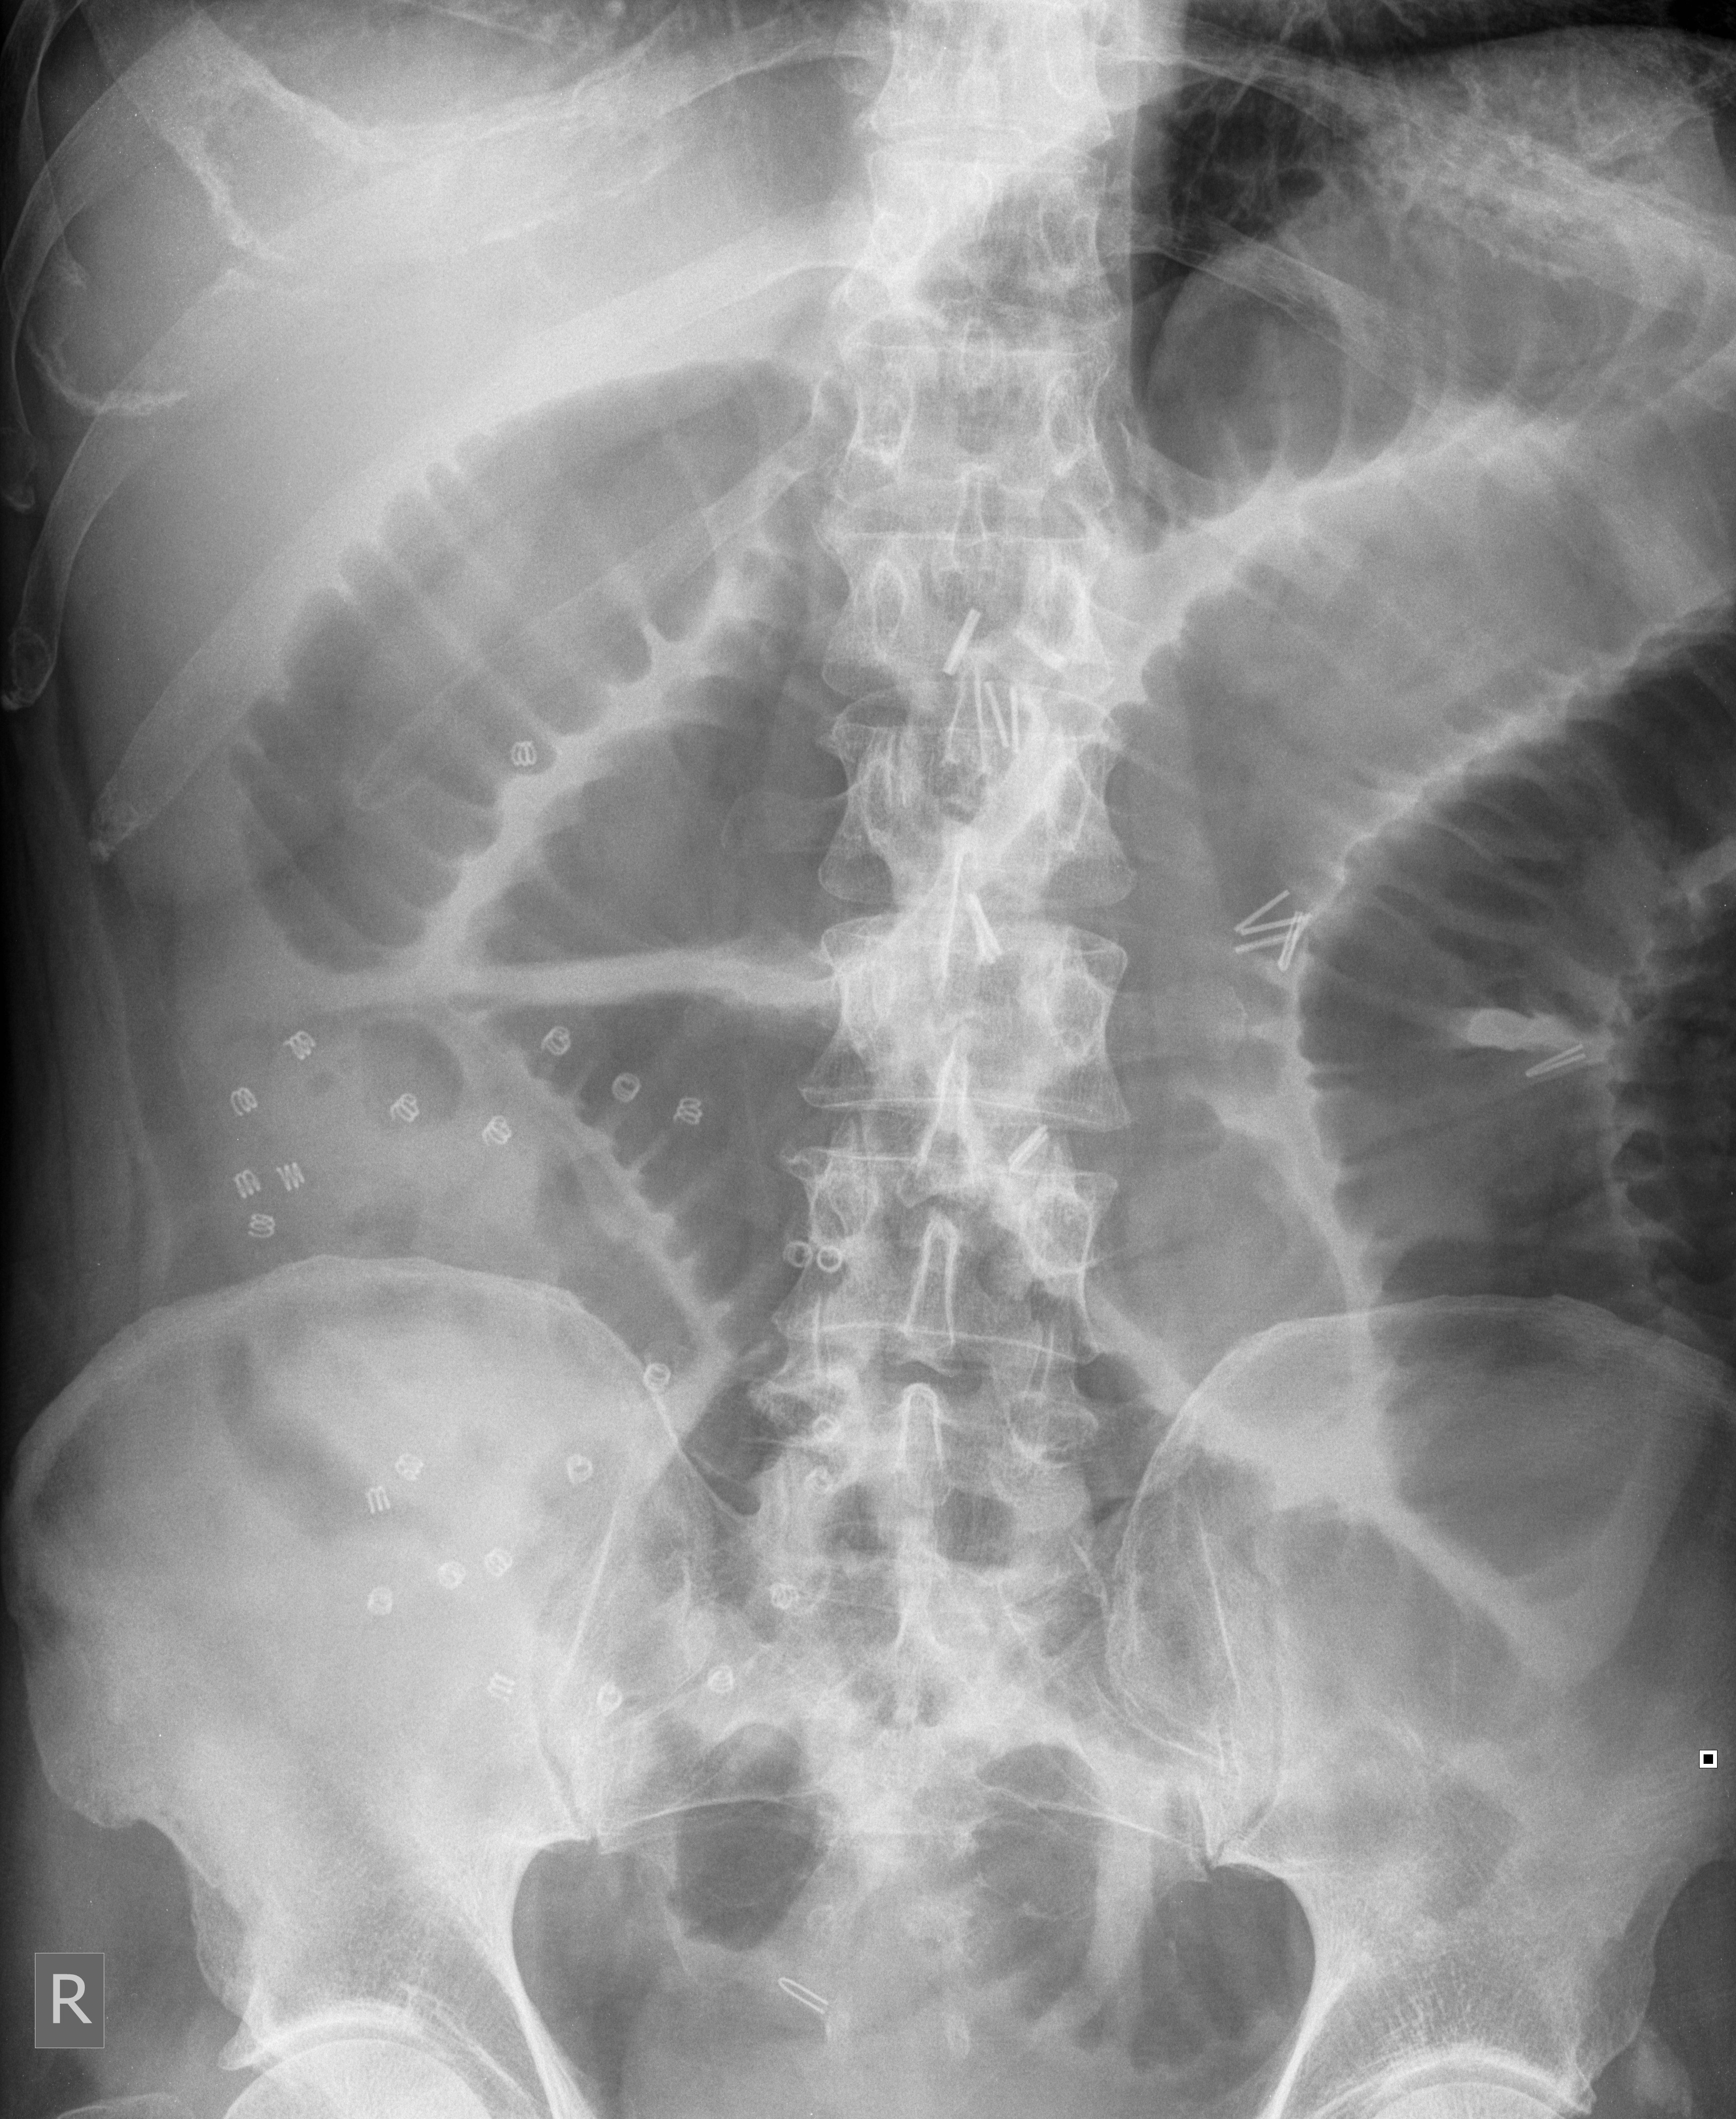 File:Small-bowel-obstruction-15.jpg